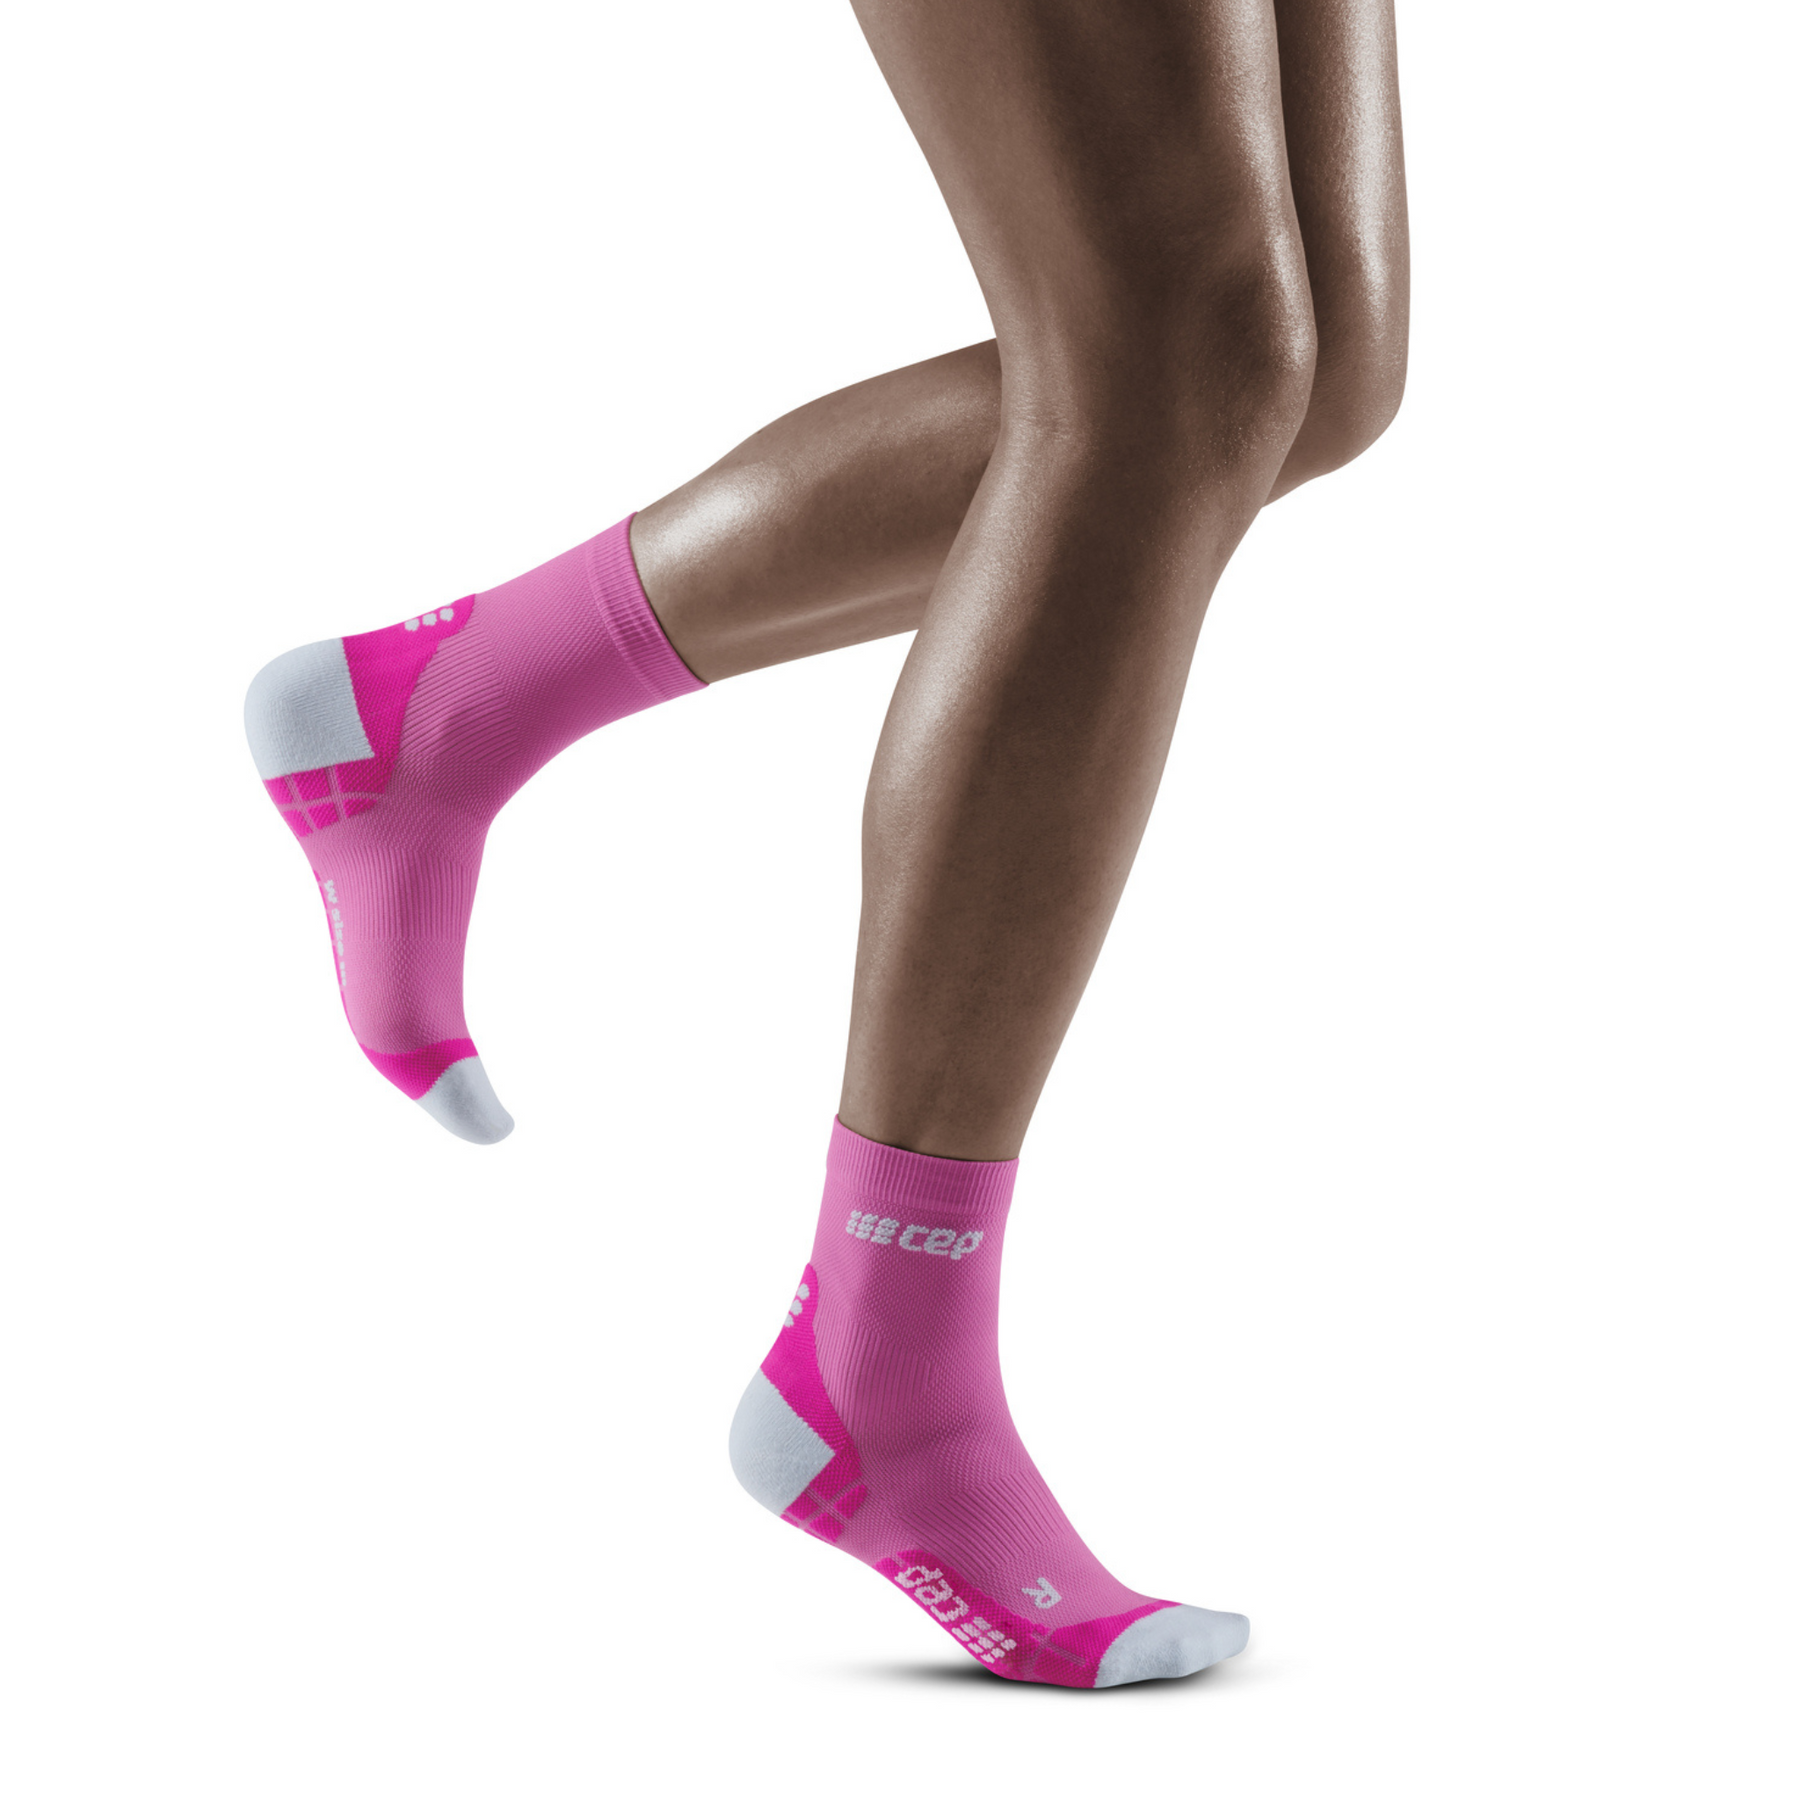 Women's Short Compression Socks, 3.0